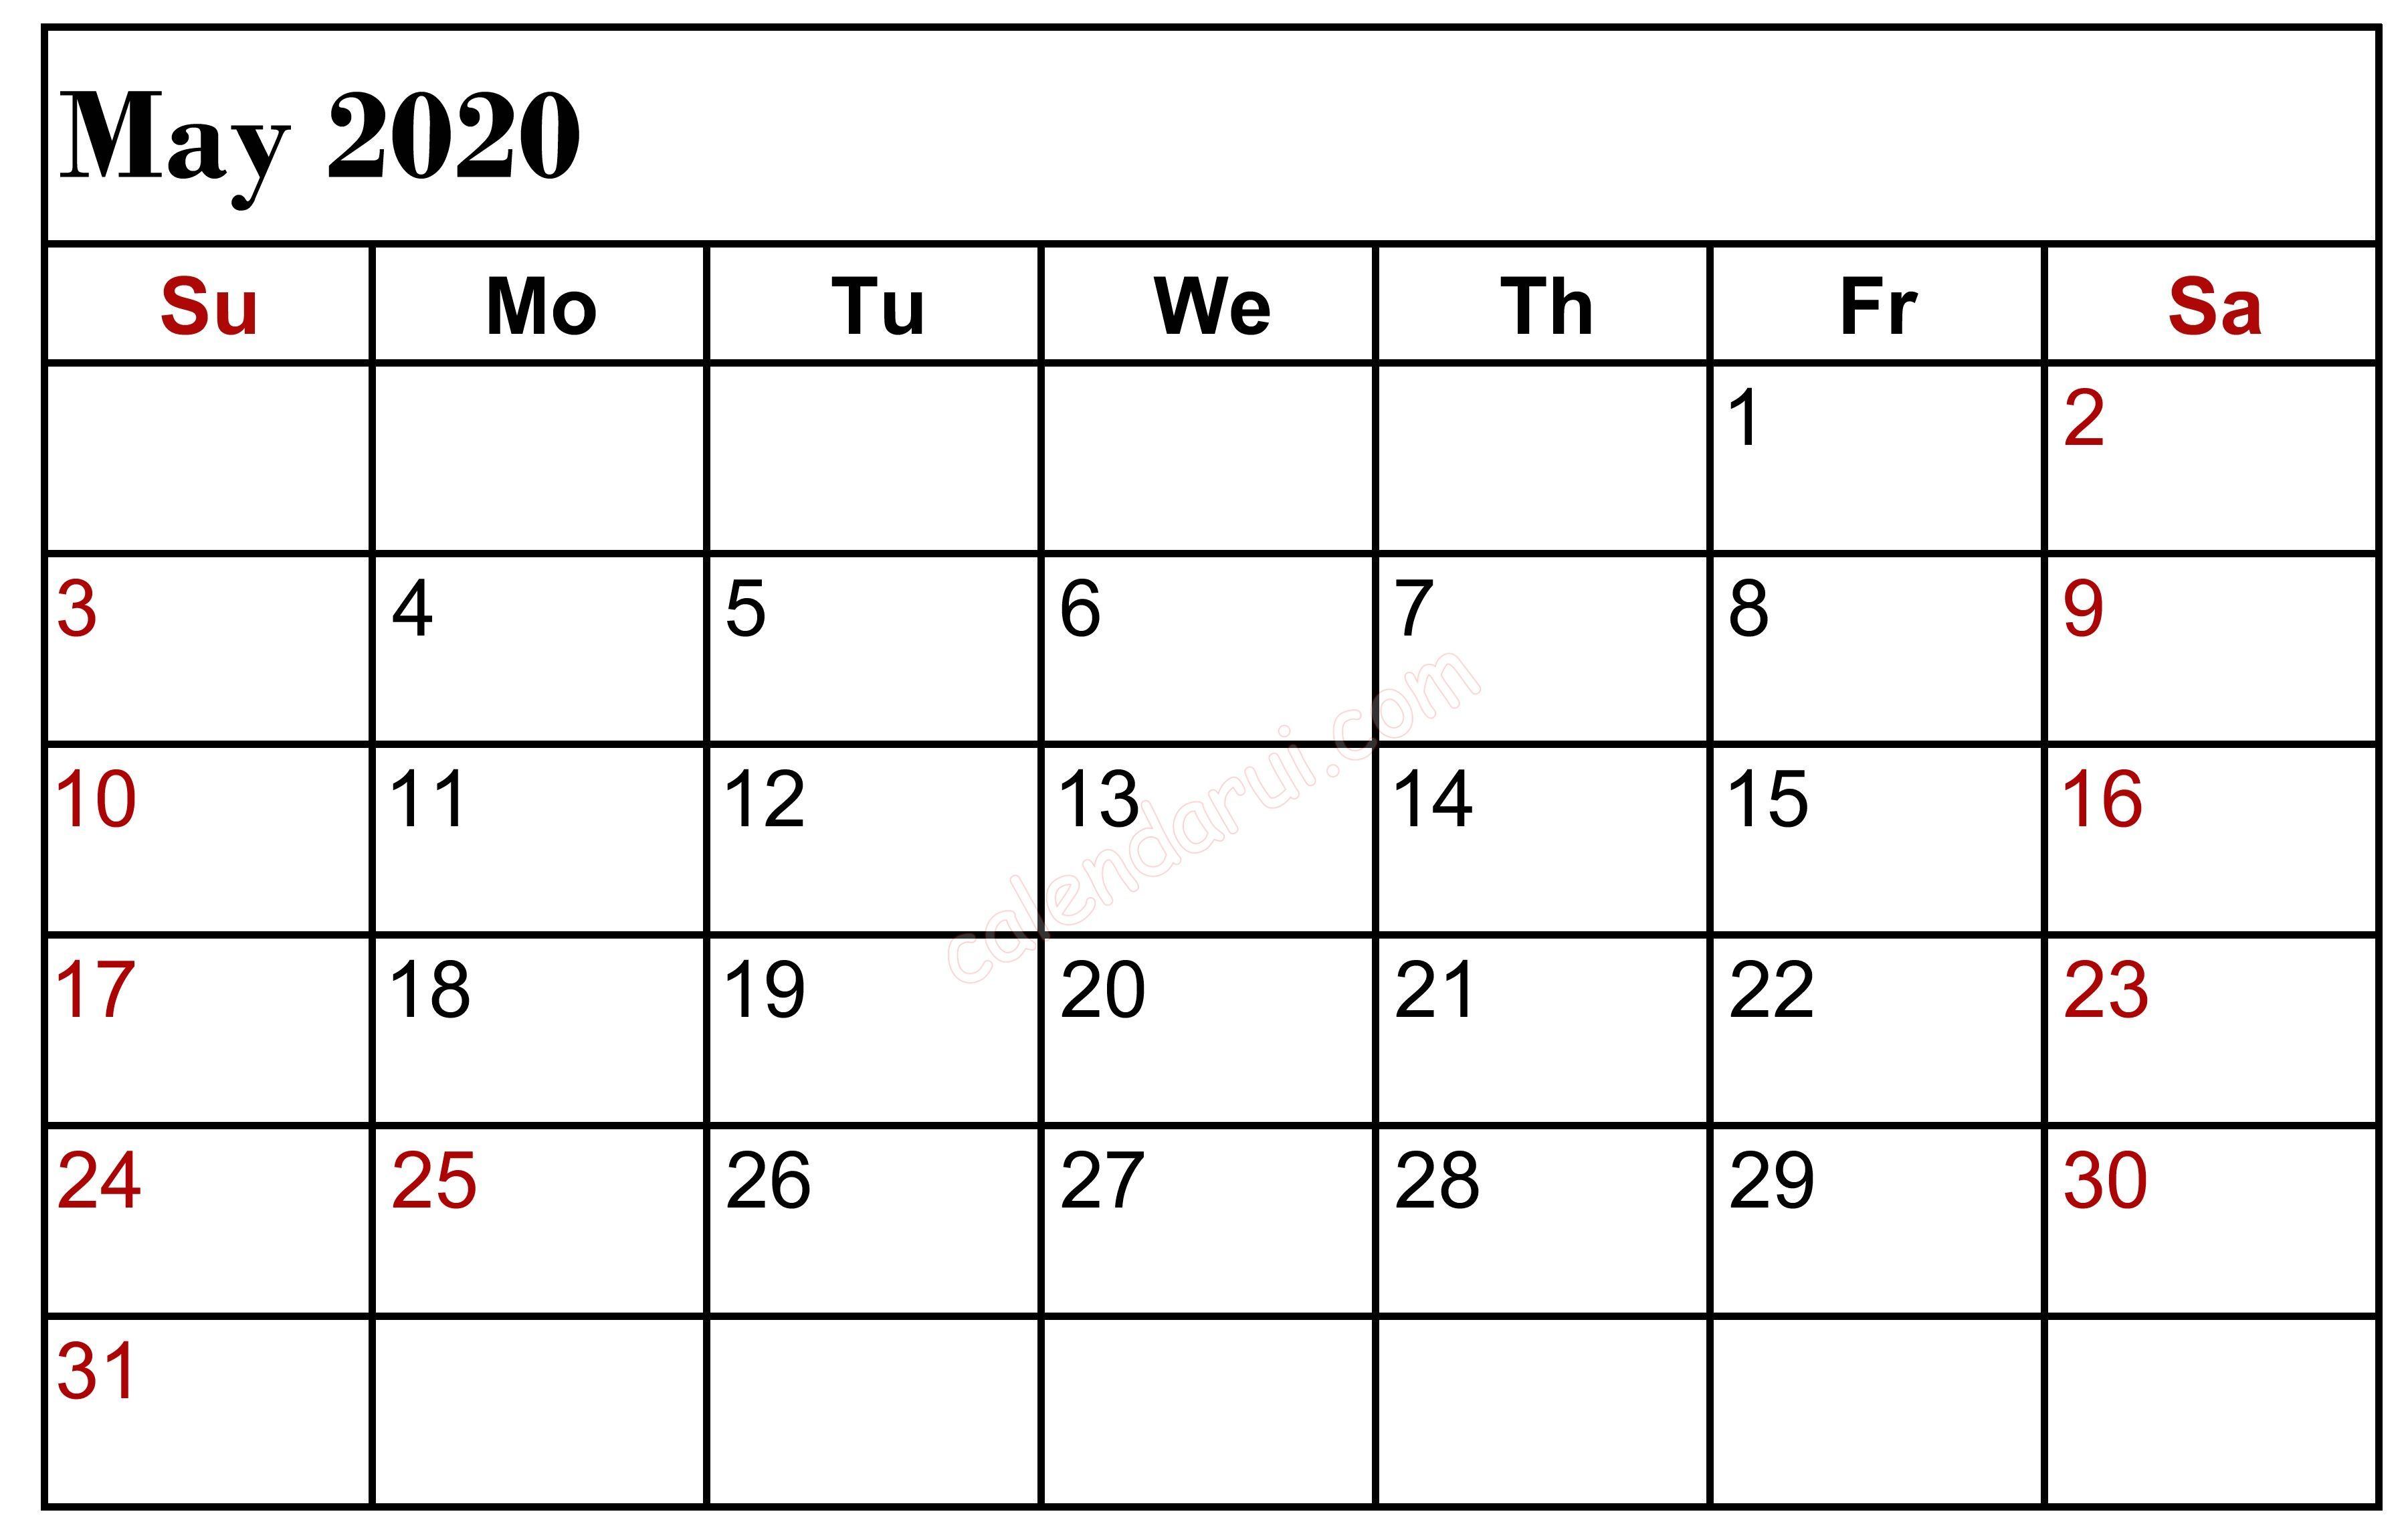 May 2020 Calendar with Holidays UK